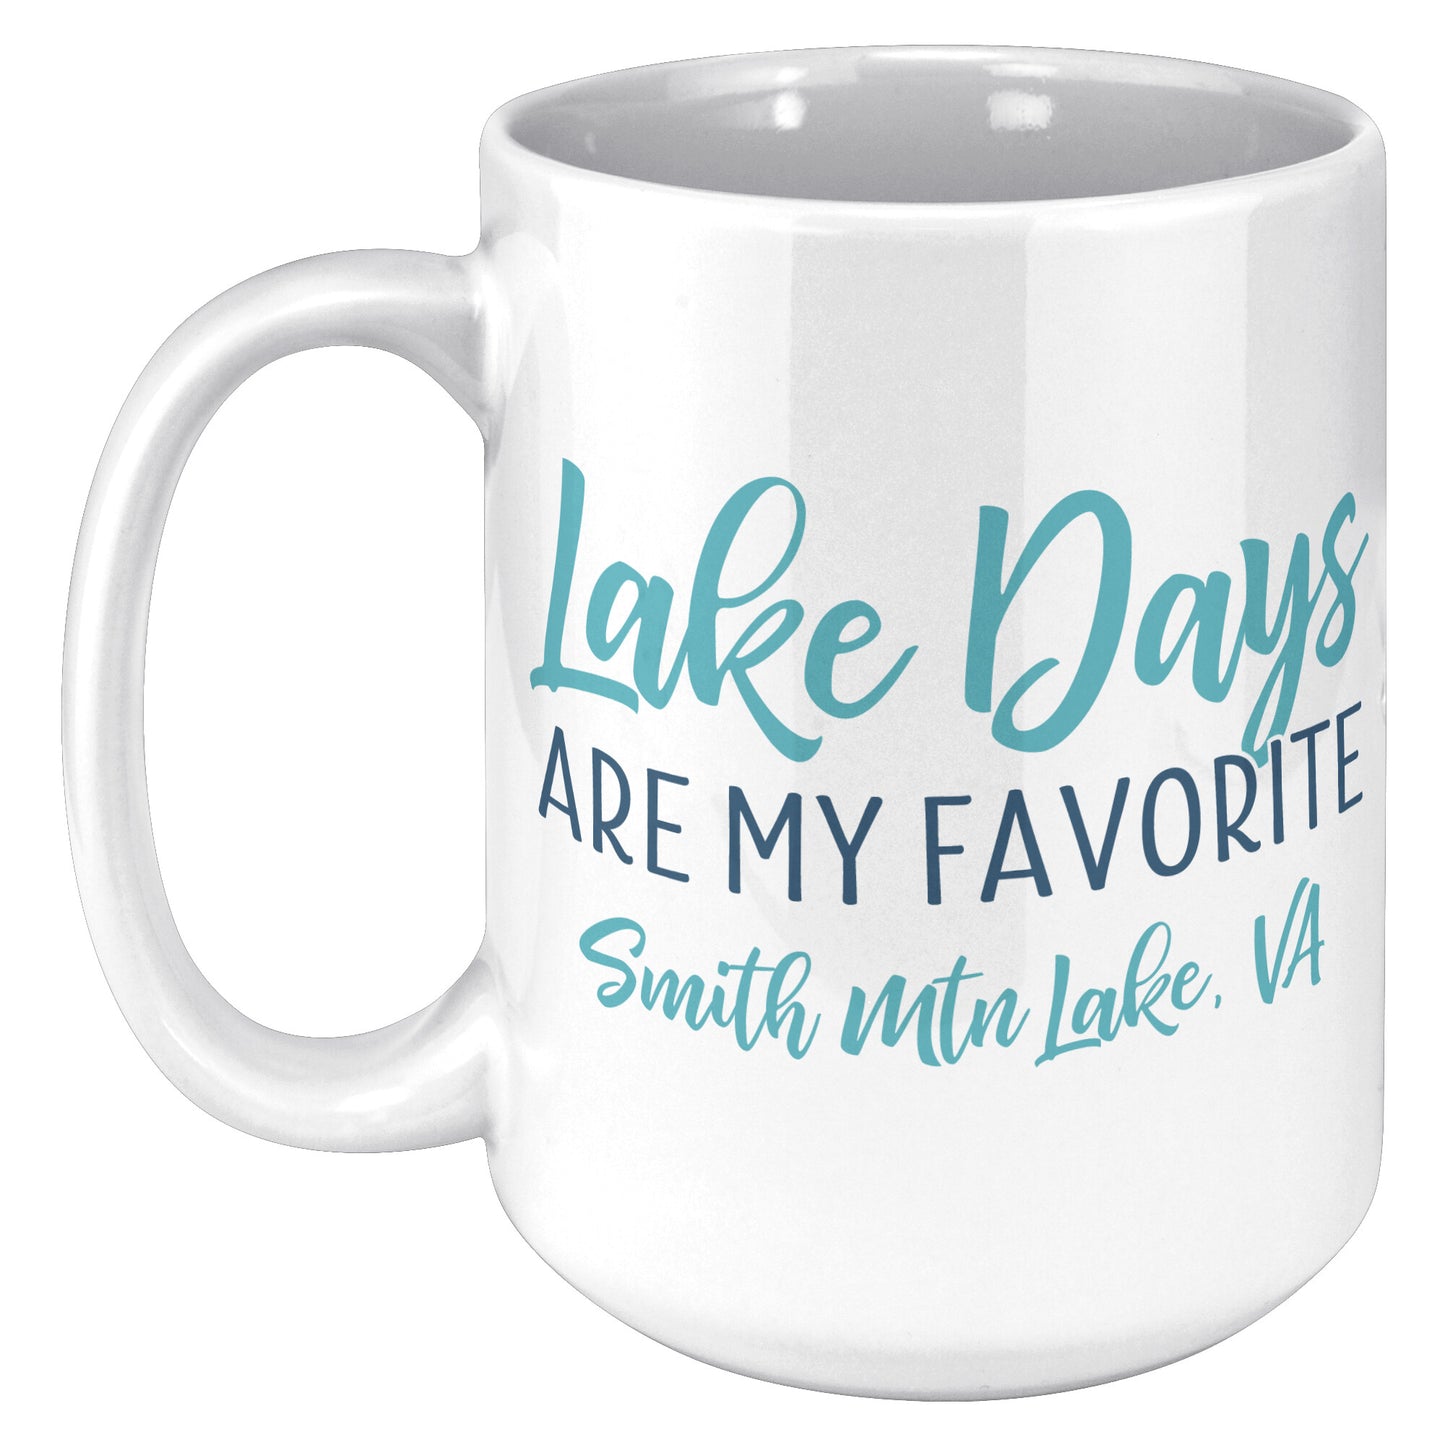 Lake Days Are My Favorite - Smith Mountain Lake, VA Coffee Mug